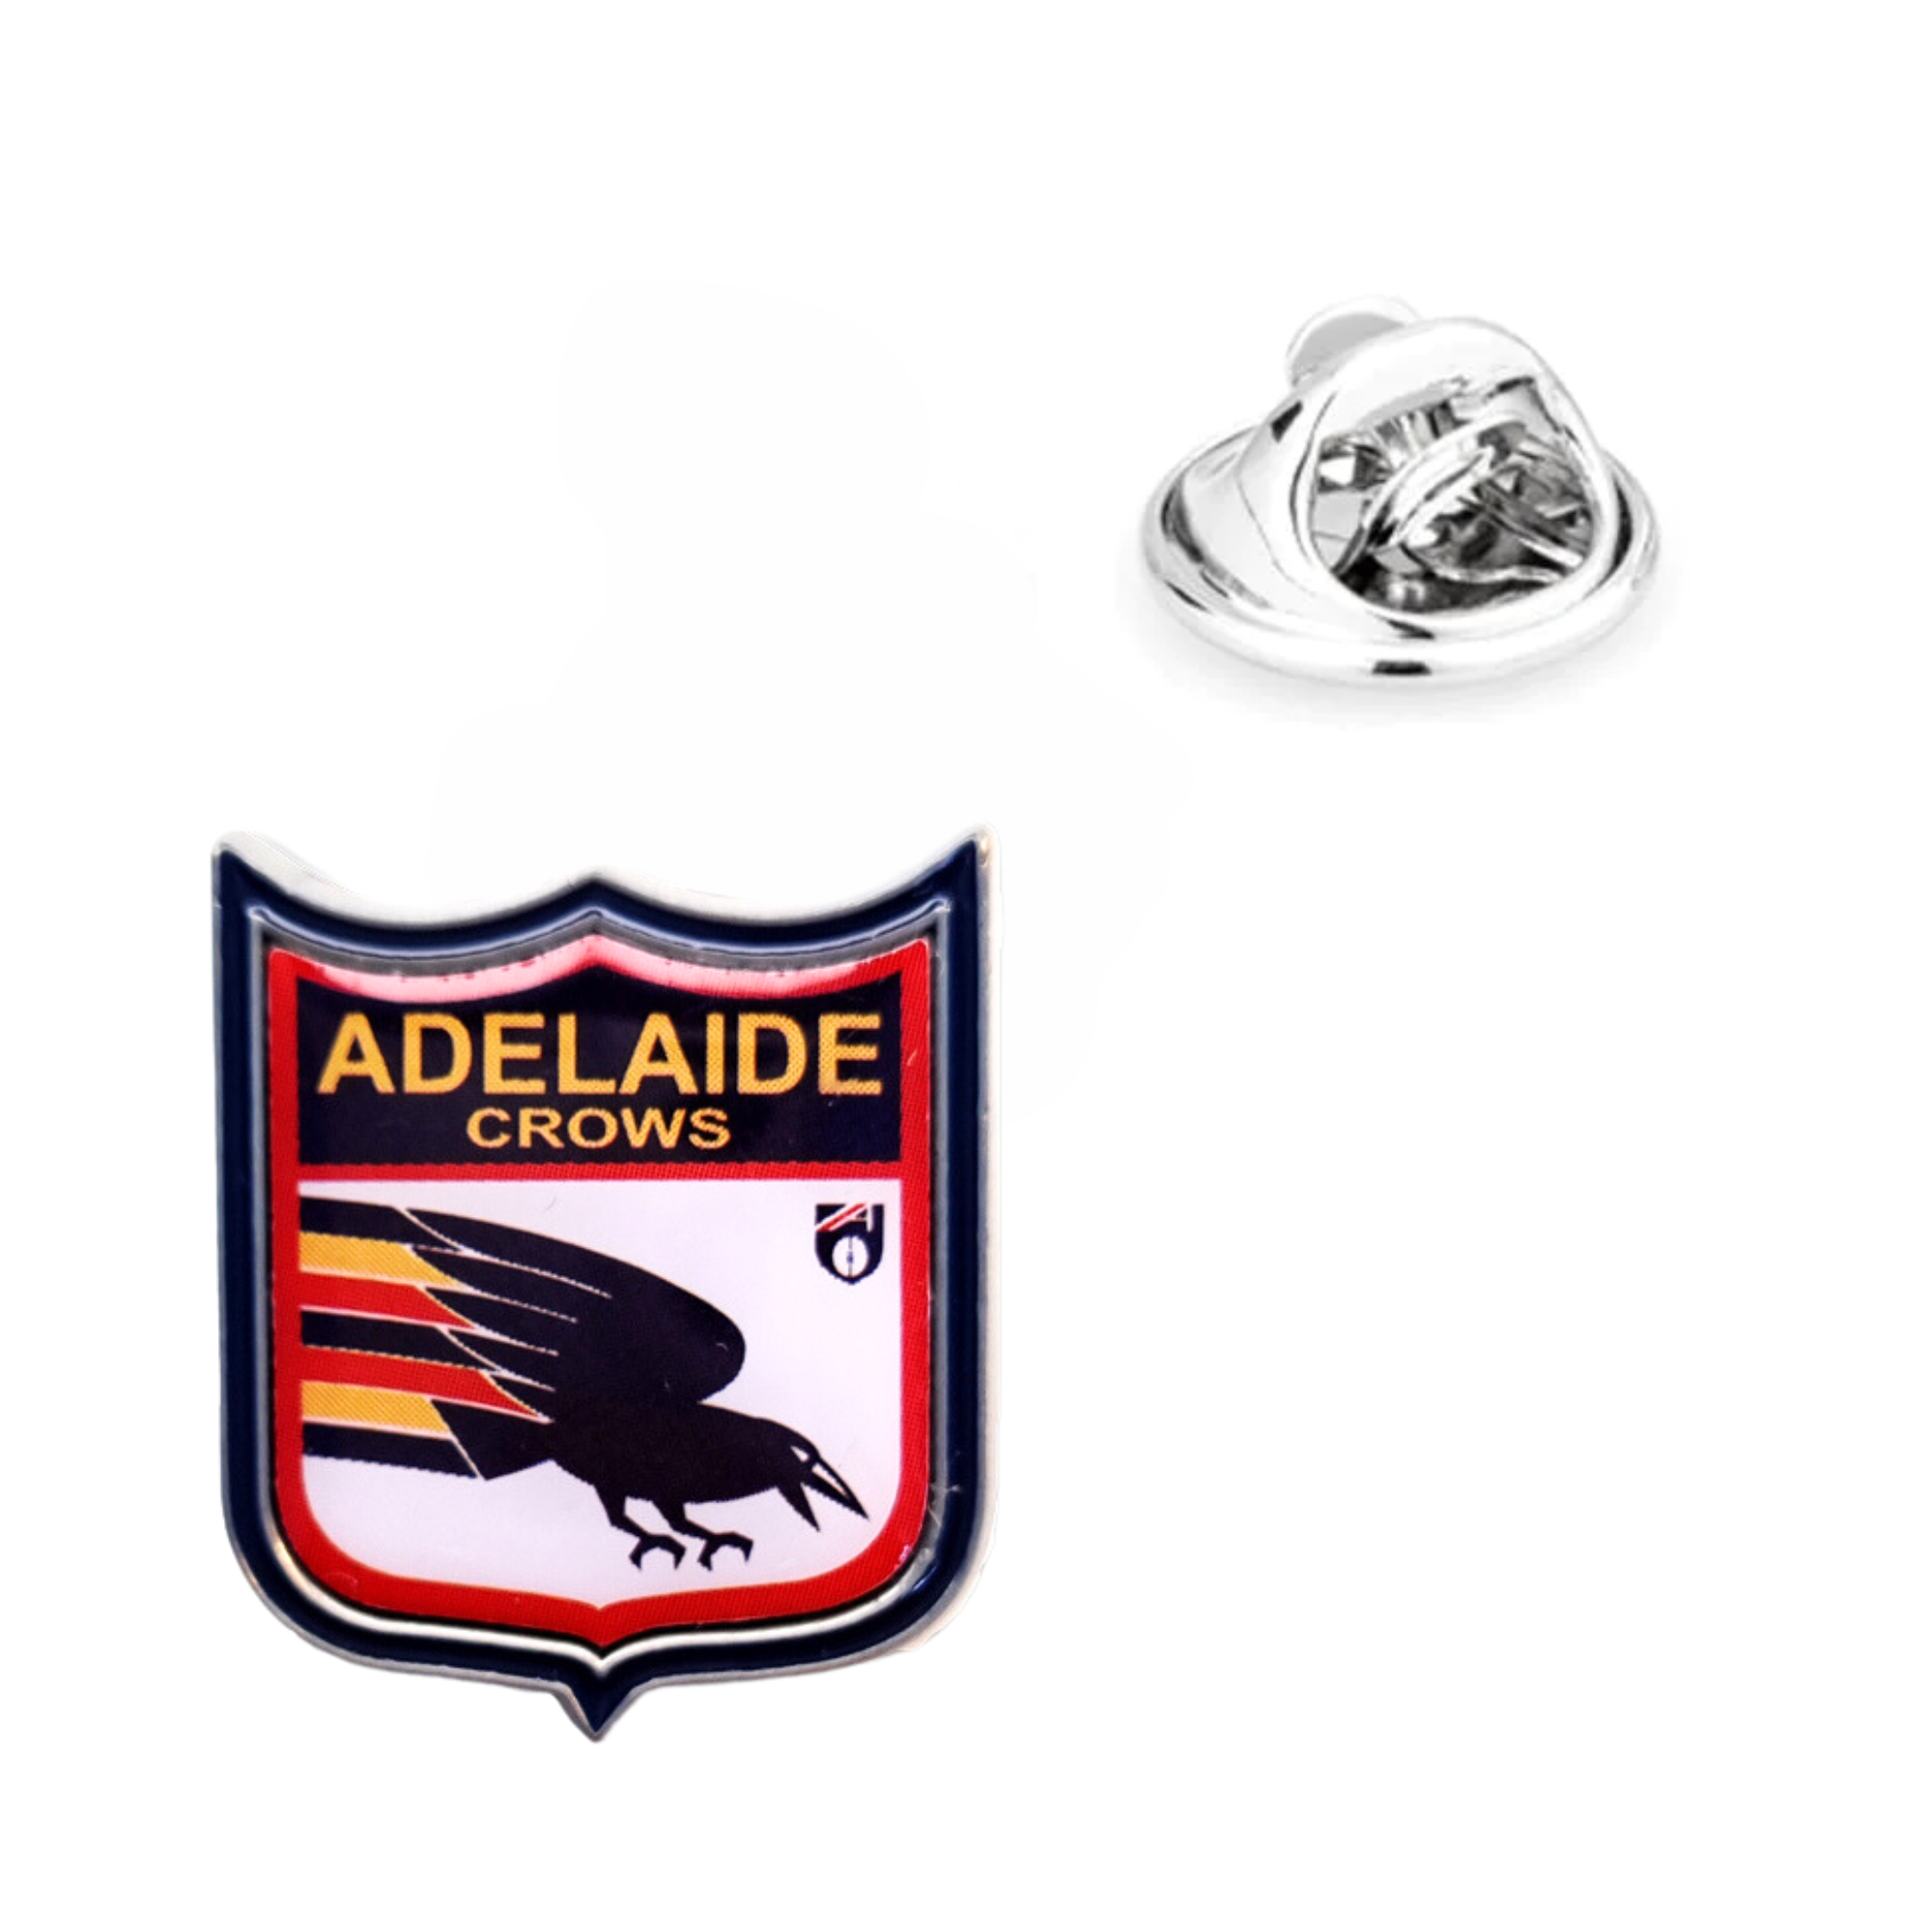 Adelaide Crows AFL Heritage Pin